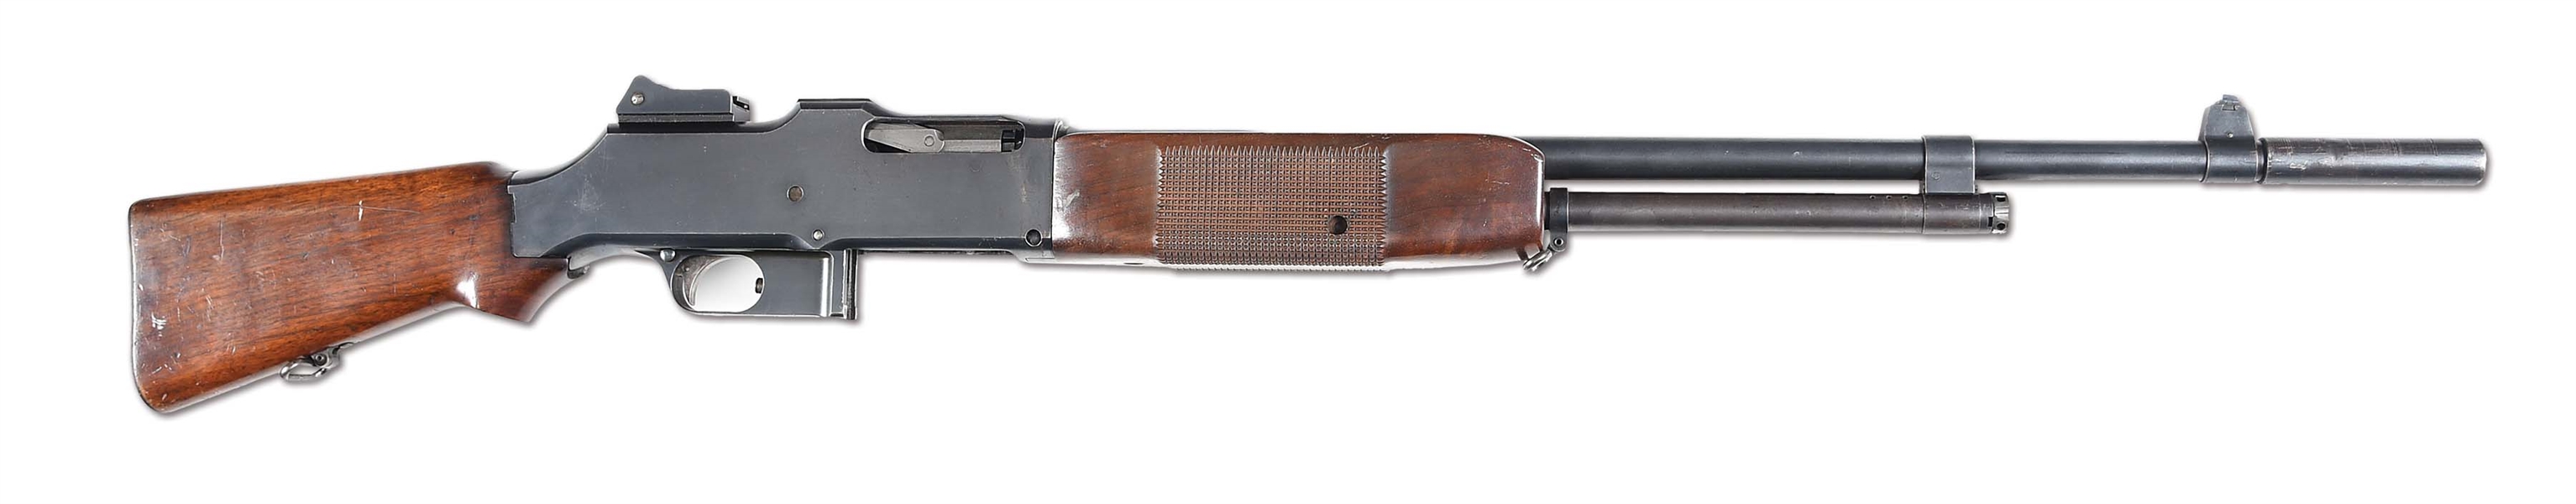 (N) HIGH CONDITION MARLIN ROCKWELL MODEL 1918 BROWNING AUTOMATIC RIFLE (B.A.R) MACHINE GUN (CURIO & RELIC).